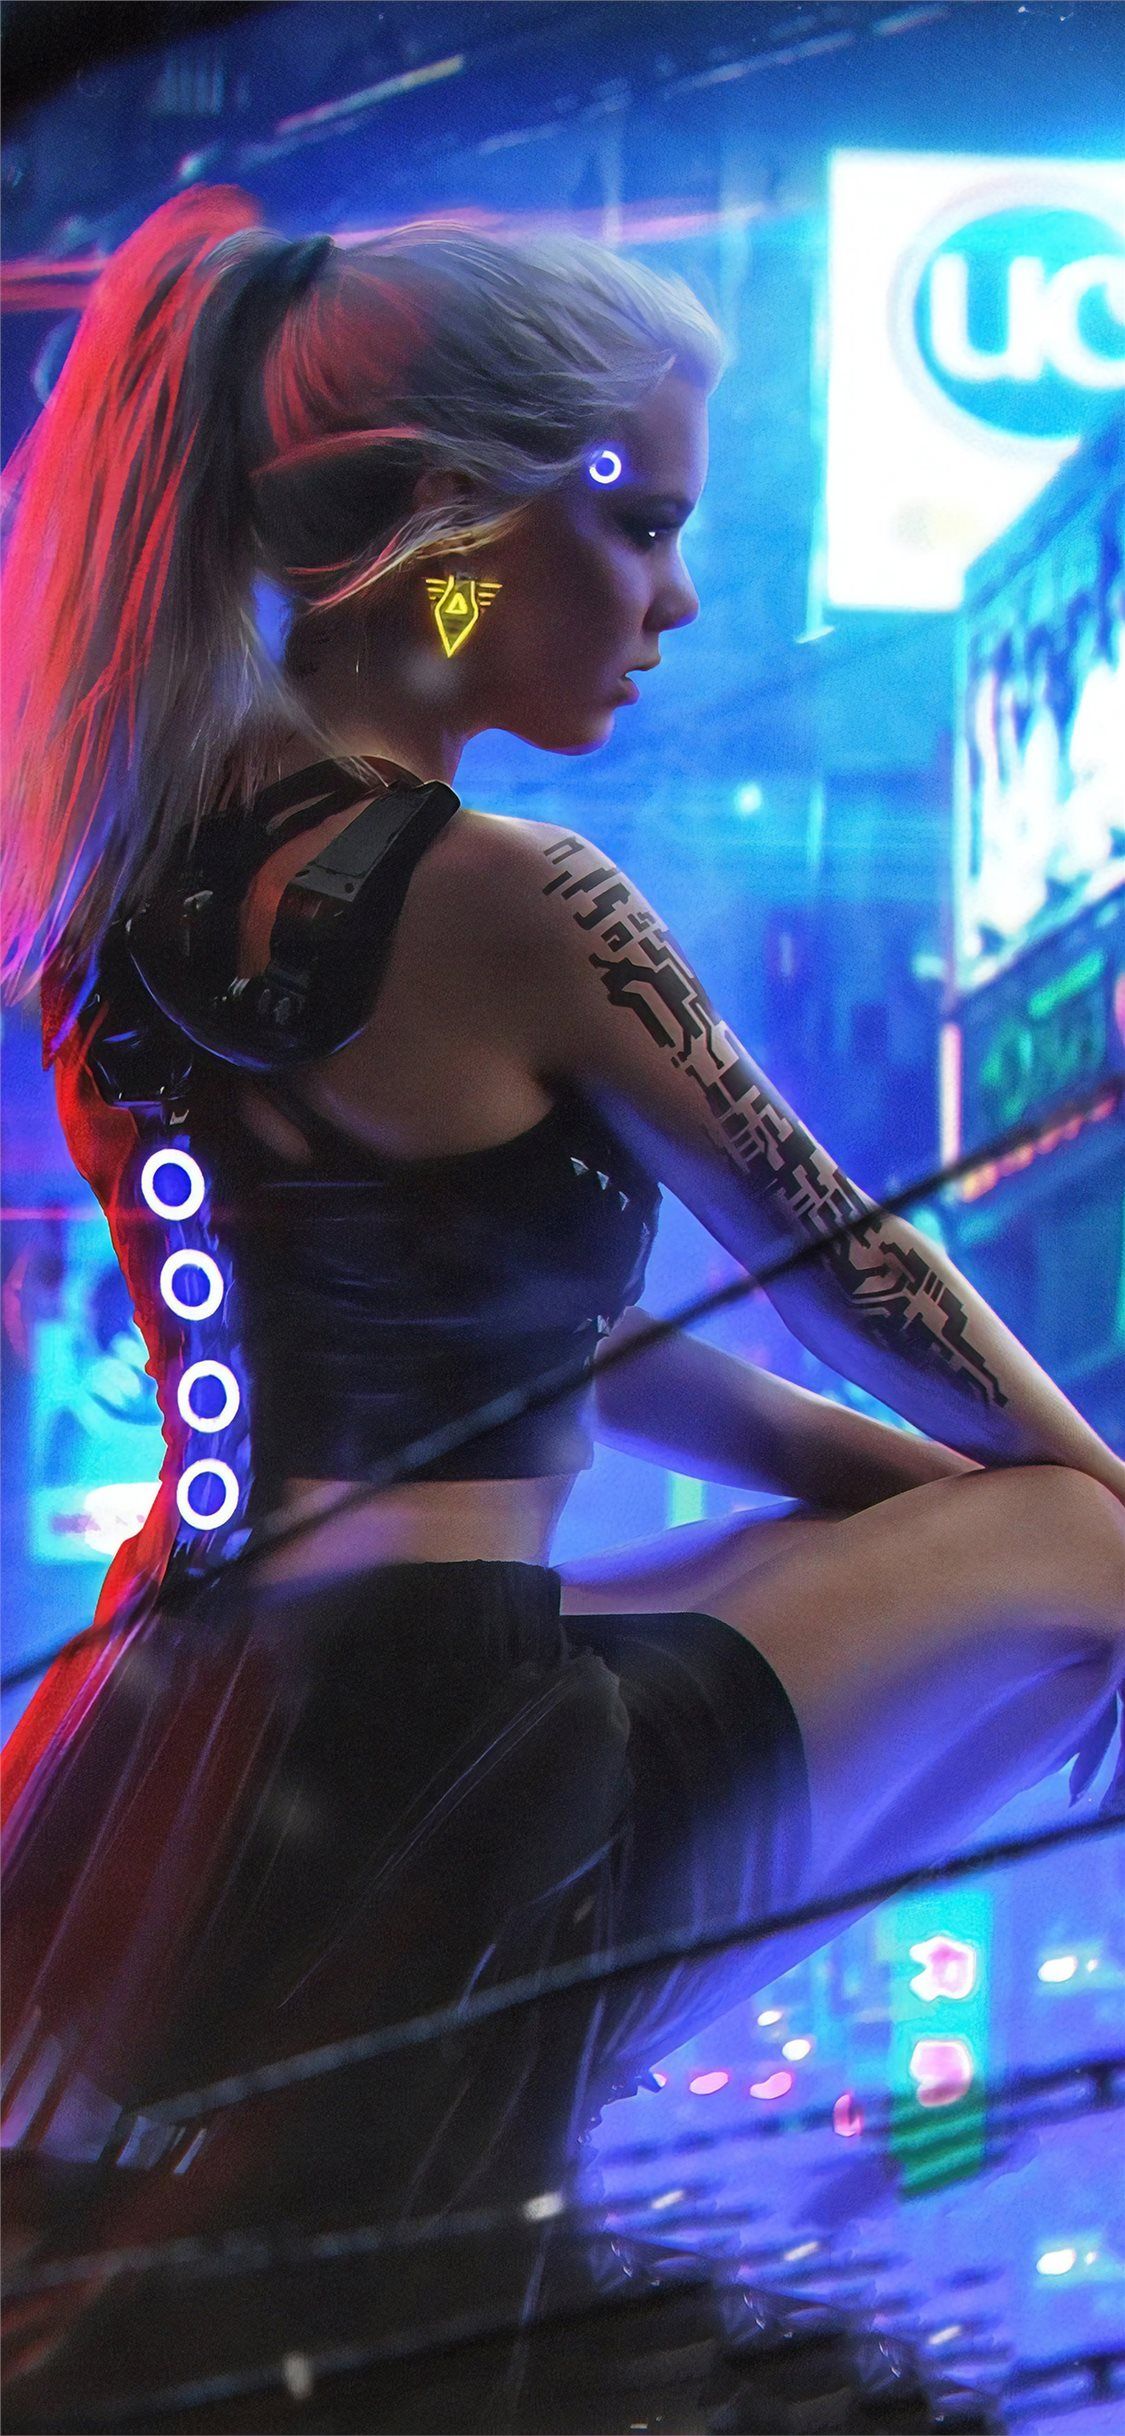 cyberpunk neon girl 4k iPhone X Wallpaper Free Download